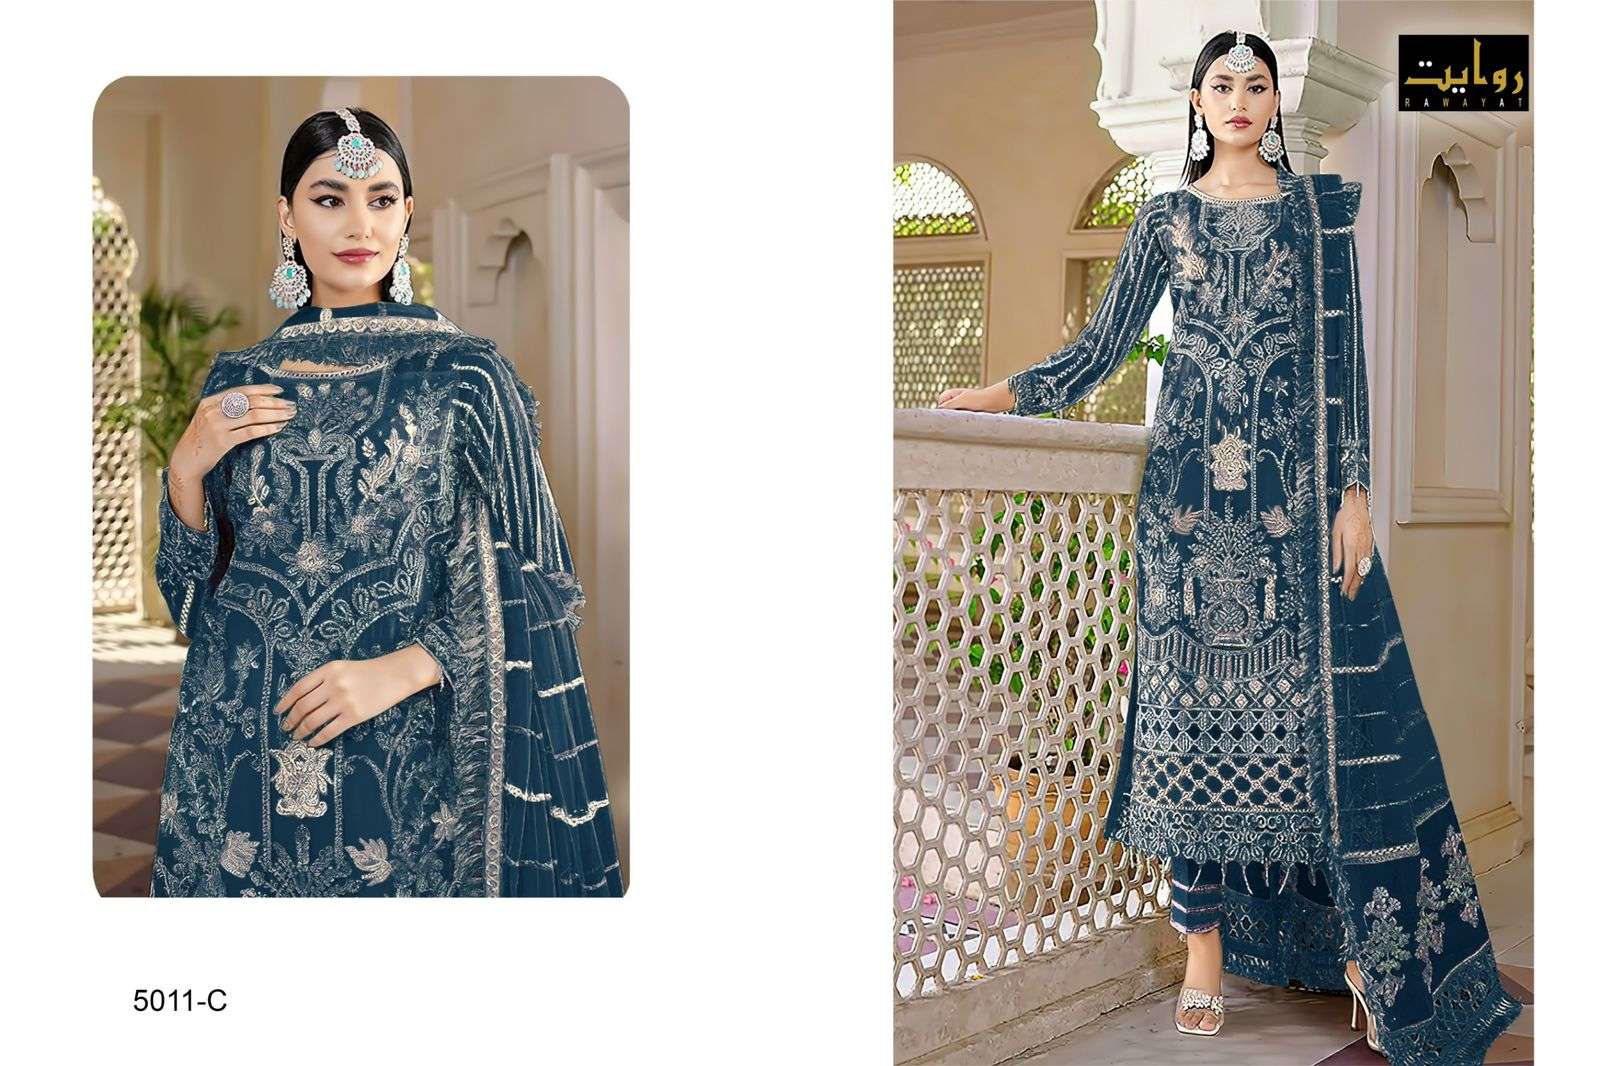 rawayat elan colours vol-10 5011 colour series designer fancy pakistani salwar kameez wholesaler surat